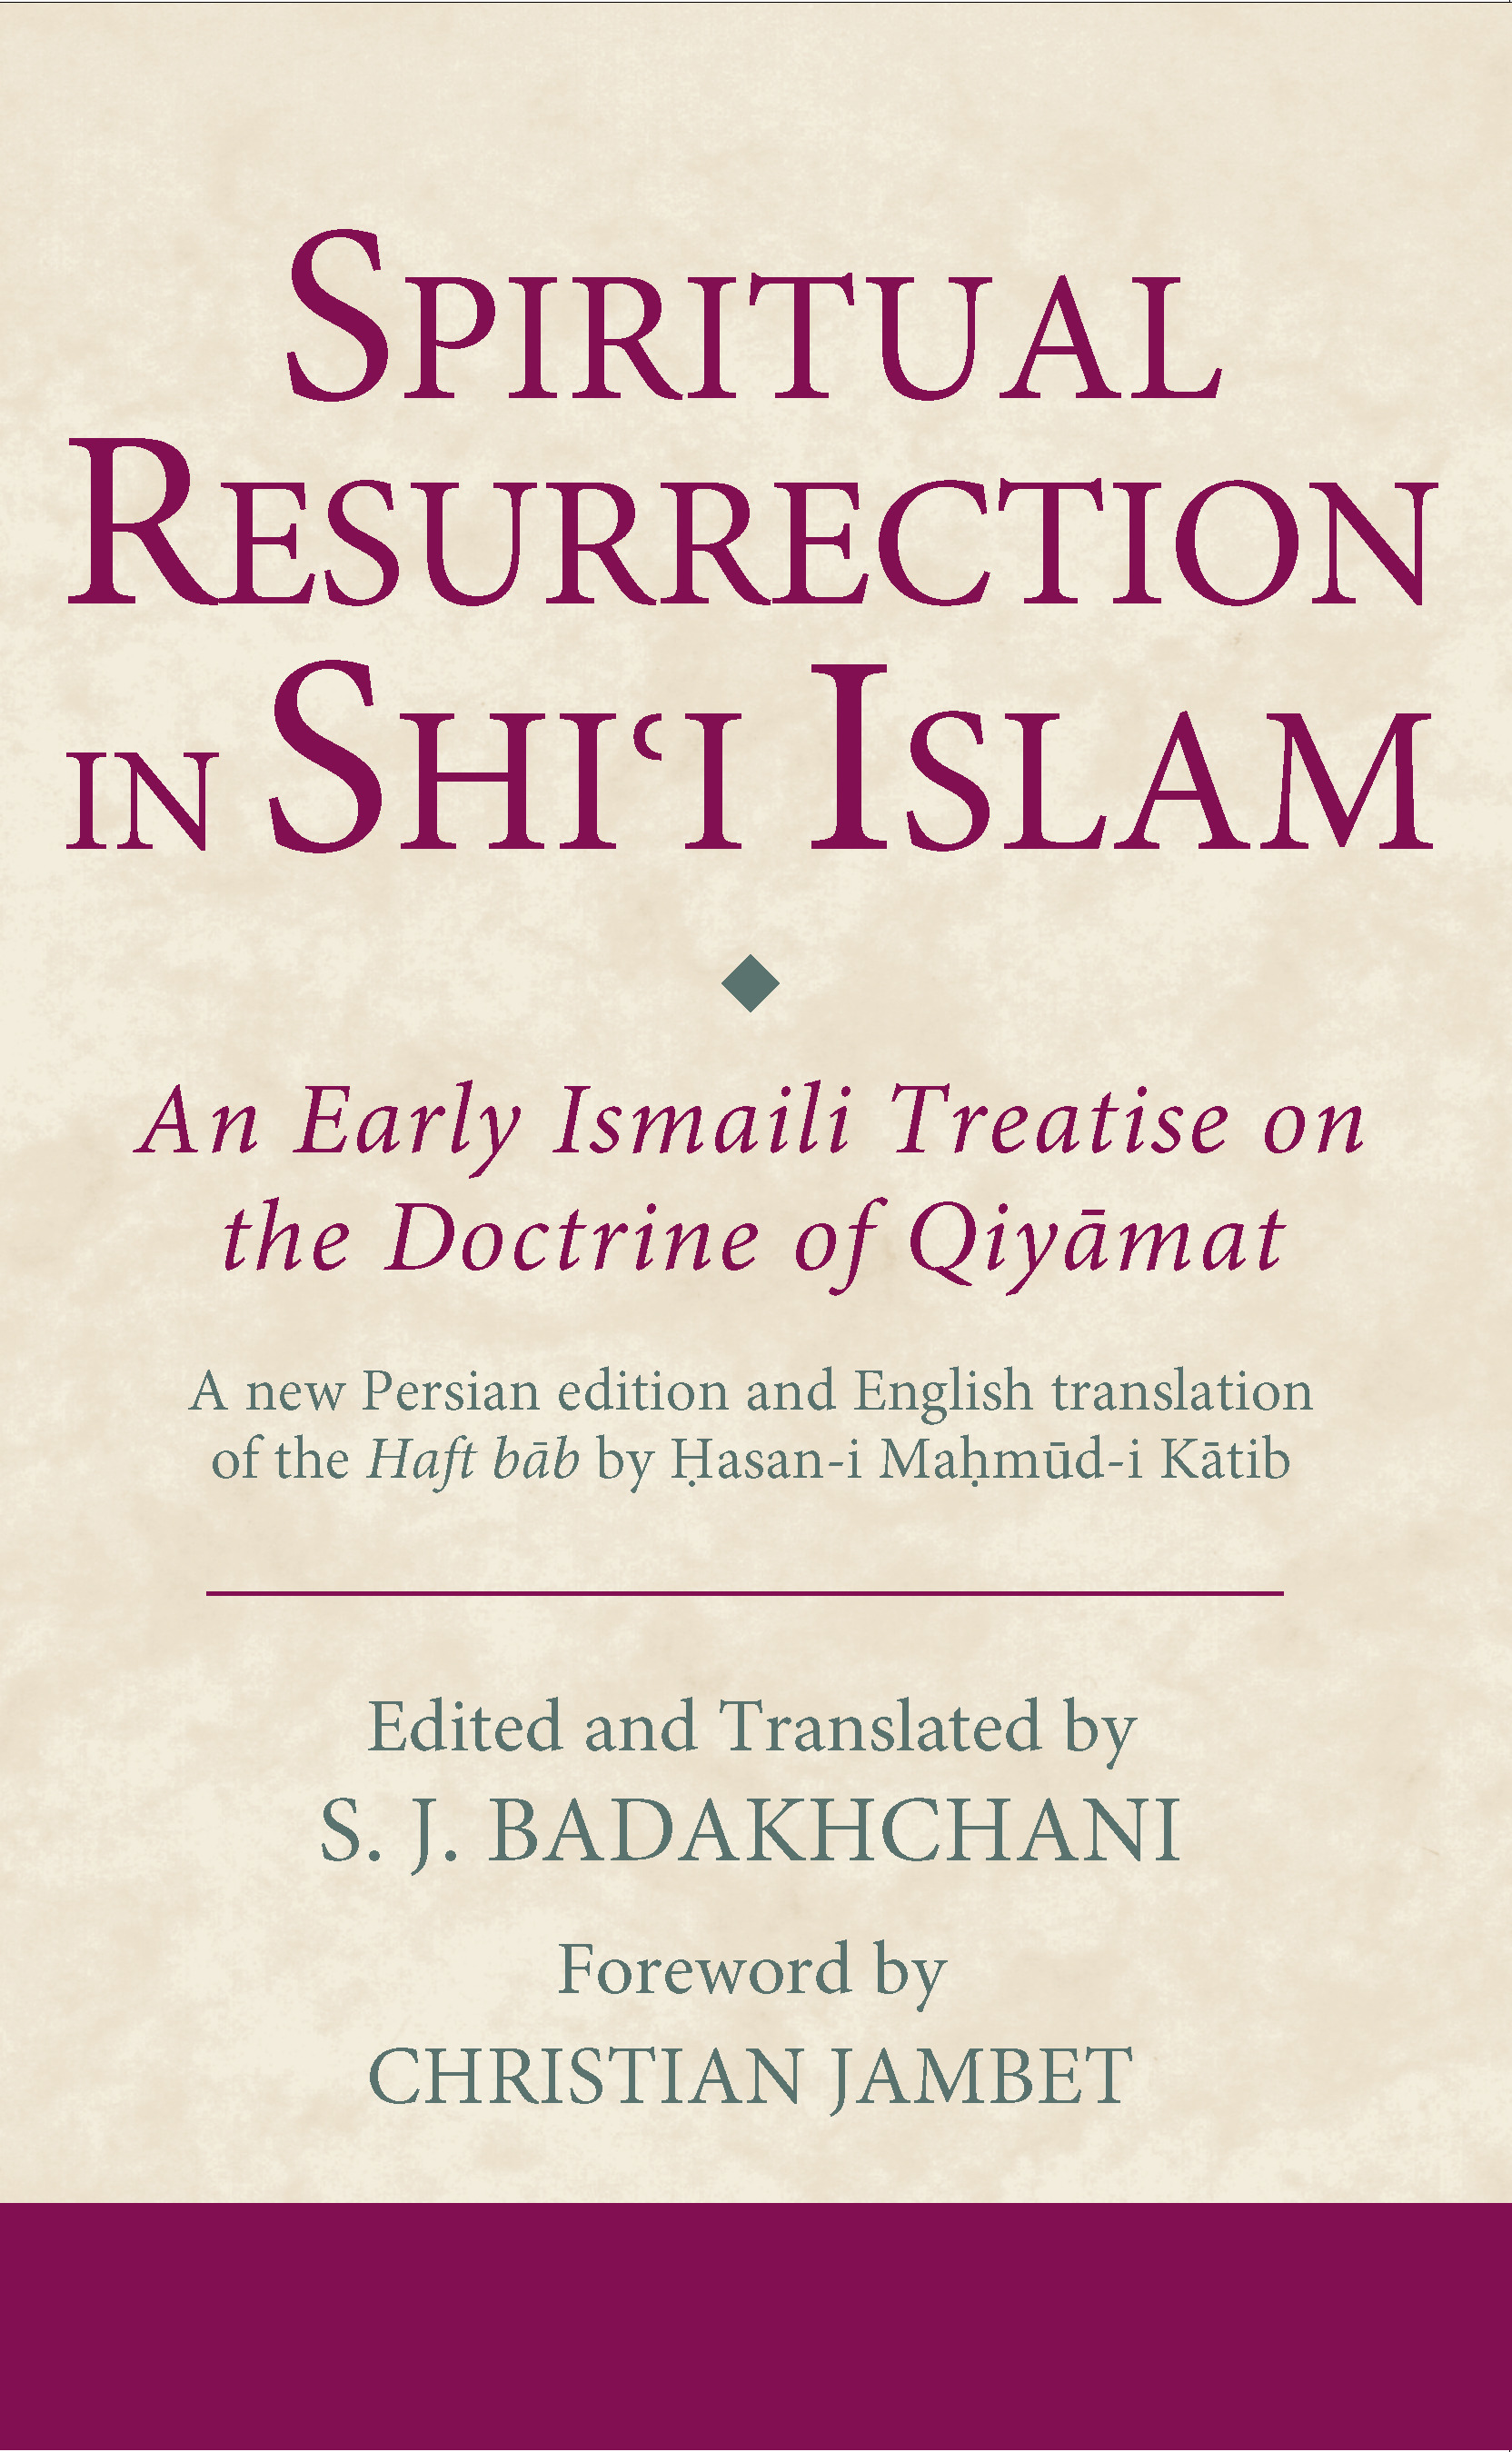 Spiritual Resurrection in Shiʿi Islam